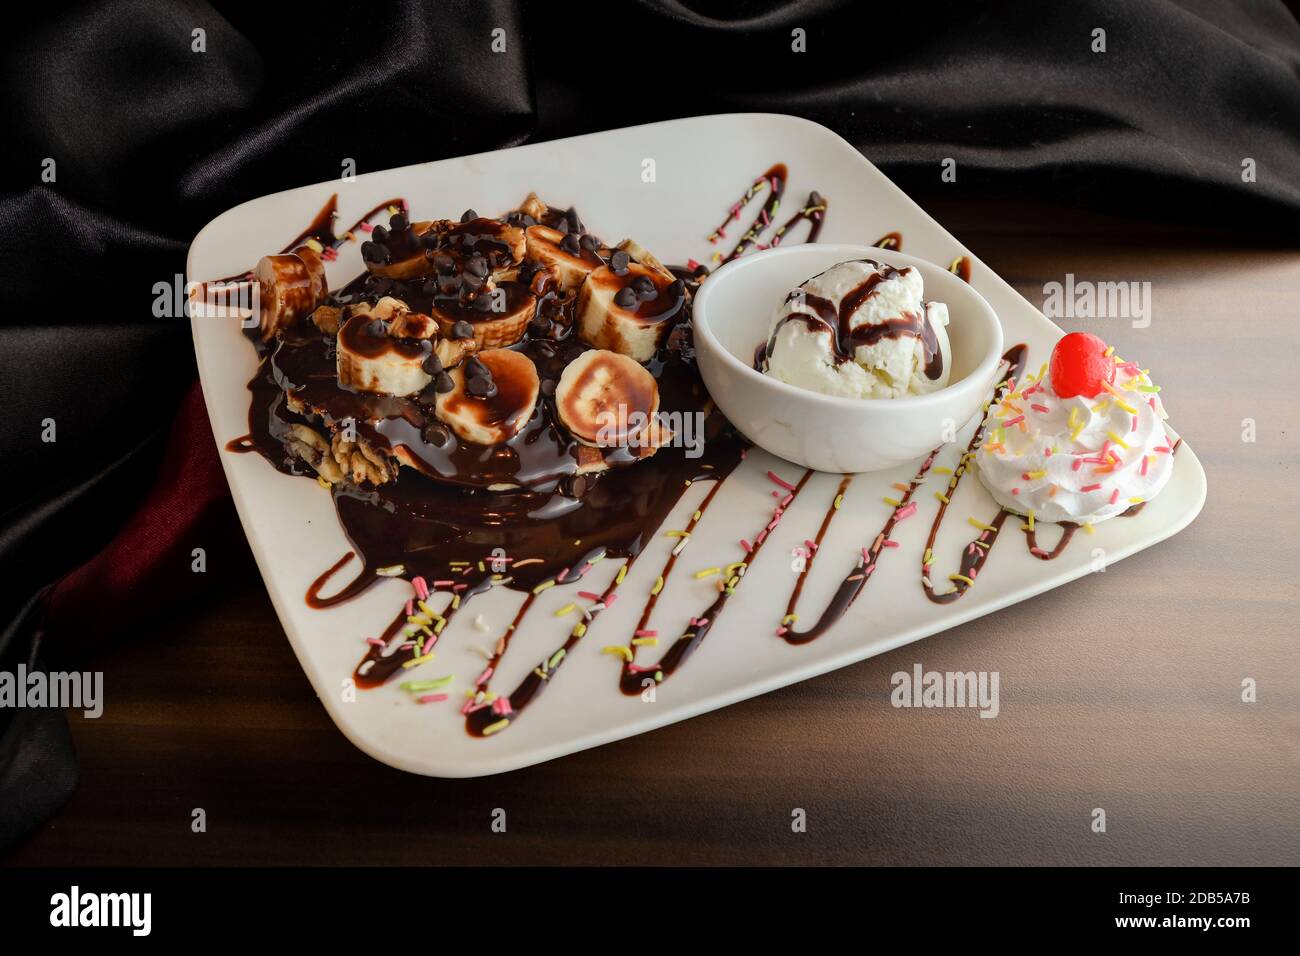 Chocolate banana Panake with ice cream Stock Photo